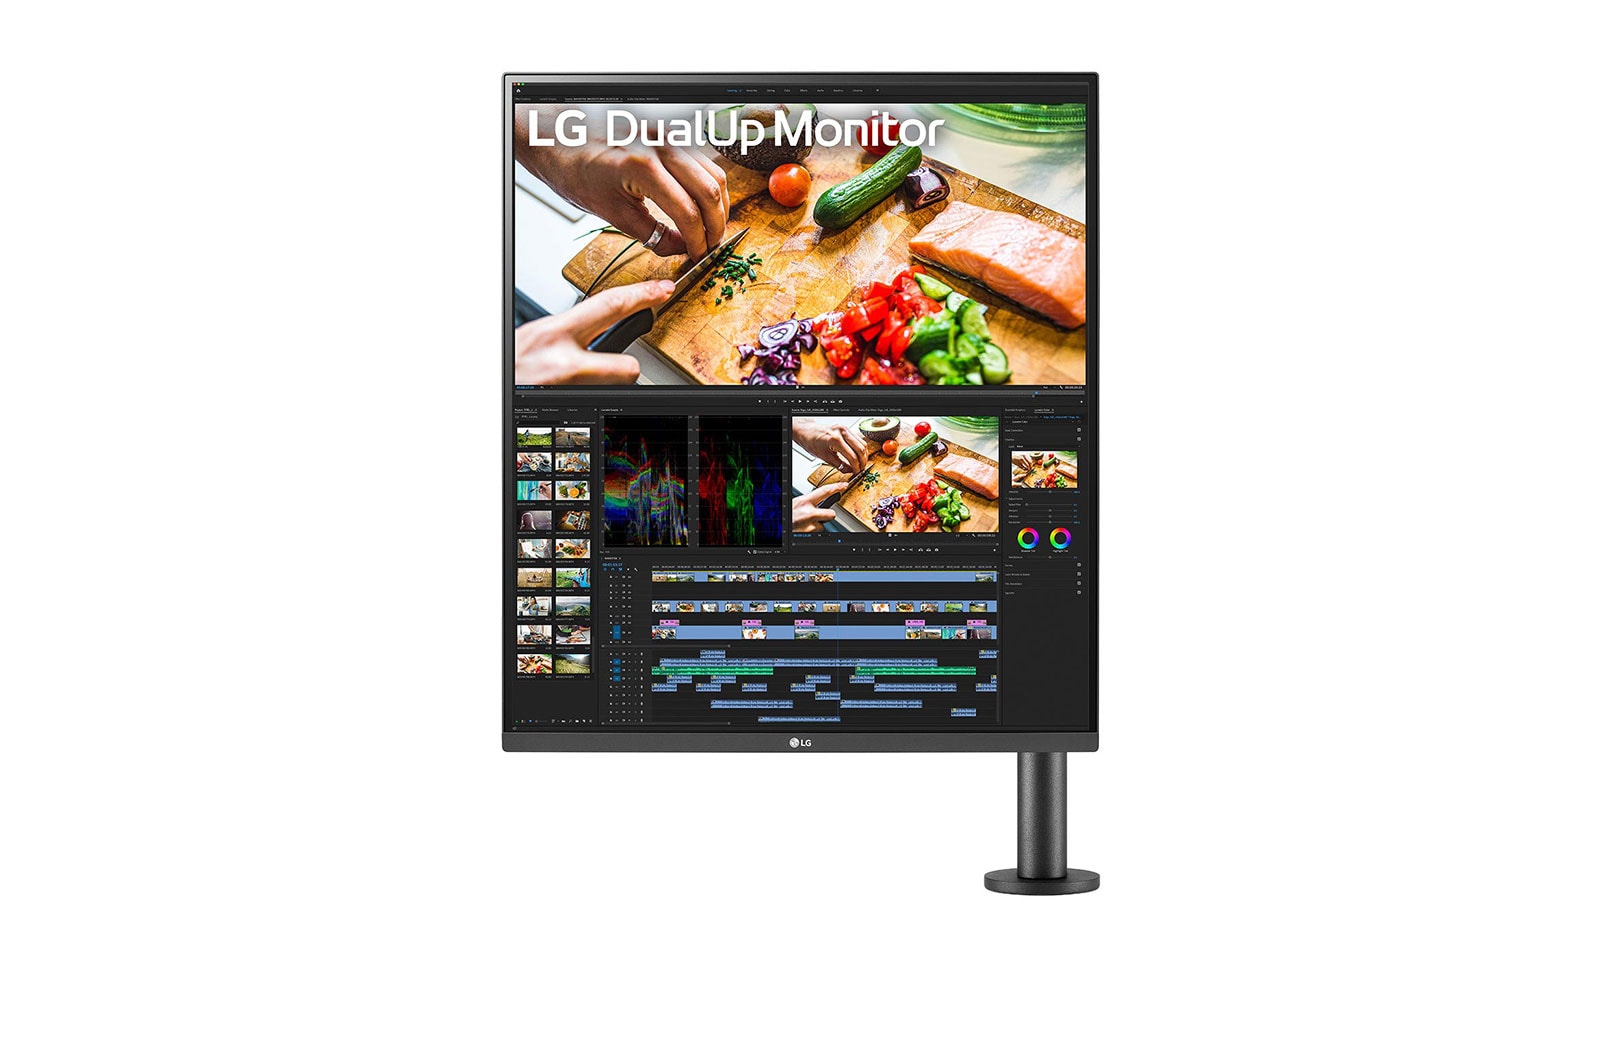 LG 28MQ780-B - Monitor LG DualUp Ergo (Panel NanoIPS SDQHD 16:18 (2560 x 2880), 300nits, 1000:1, DCI-P3>98%); entr.: HDMIx2, DPx1, USB-Cx1; Modo (2PBP) con KVM integrado, Altavoces estéreo 7W, soporte Ergo , 28MQ780-B